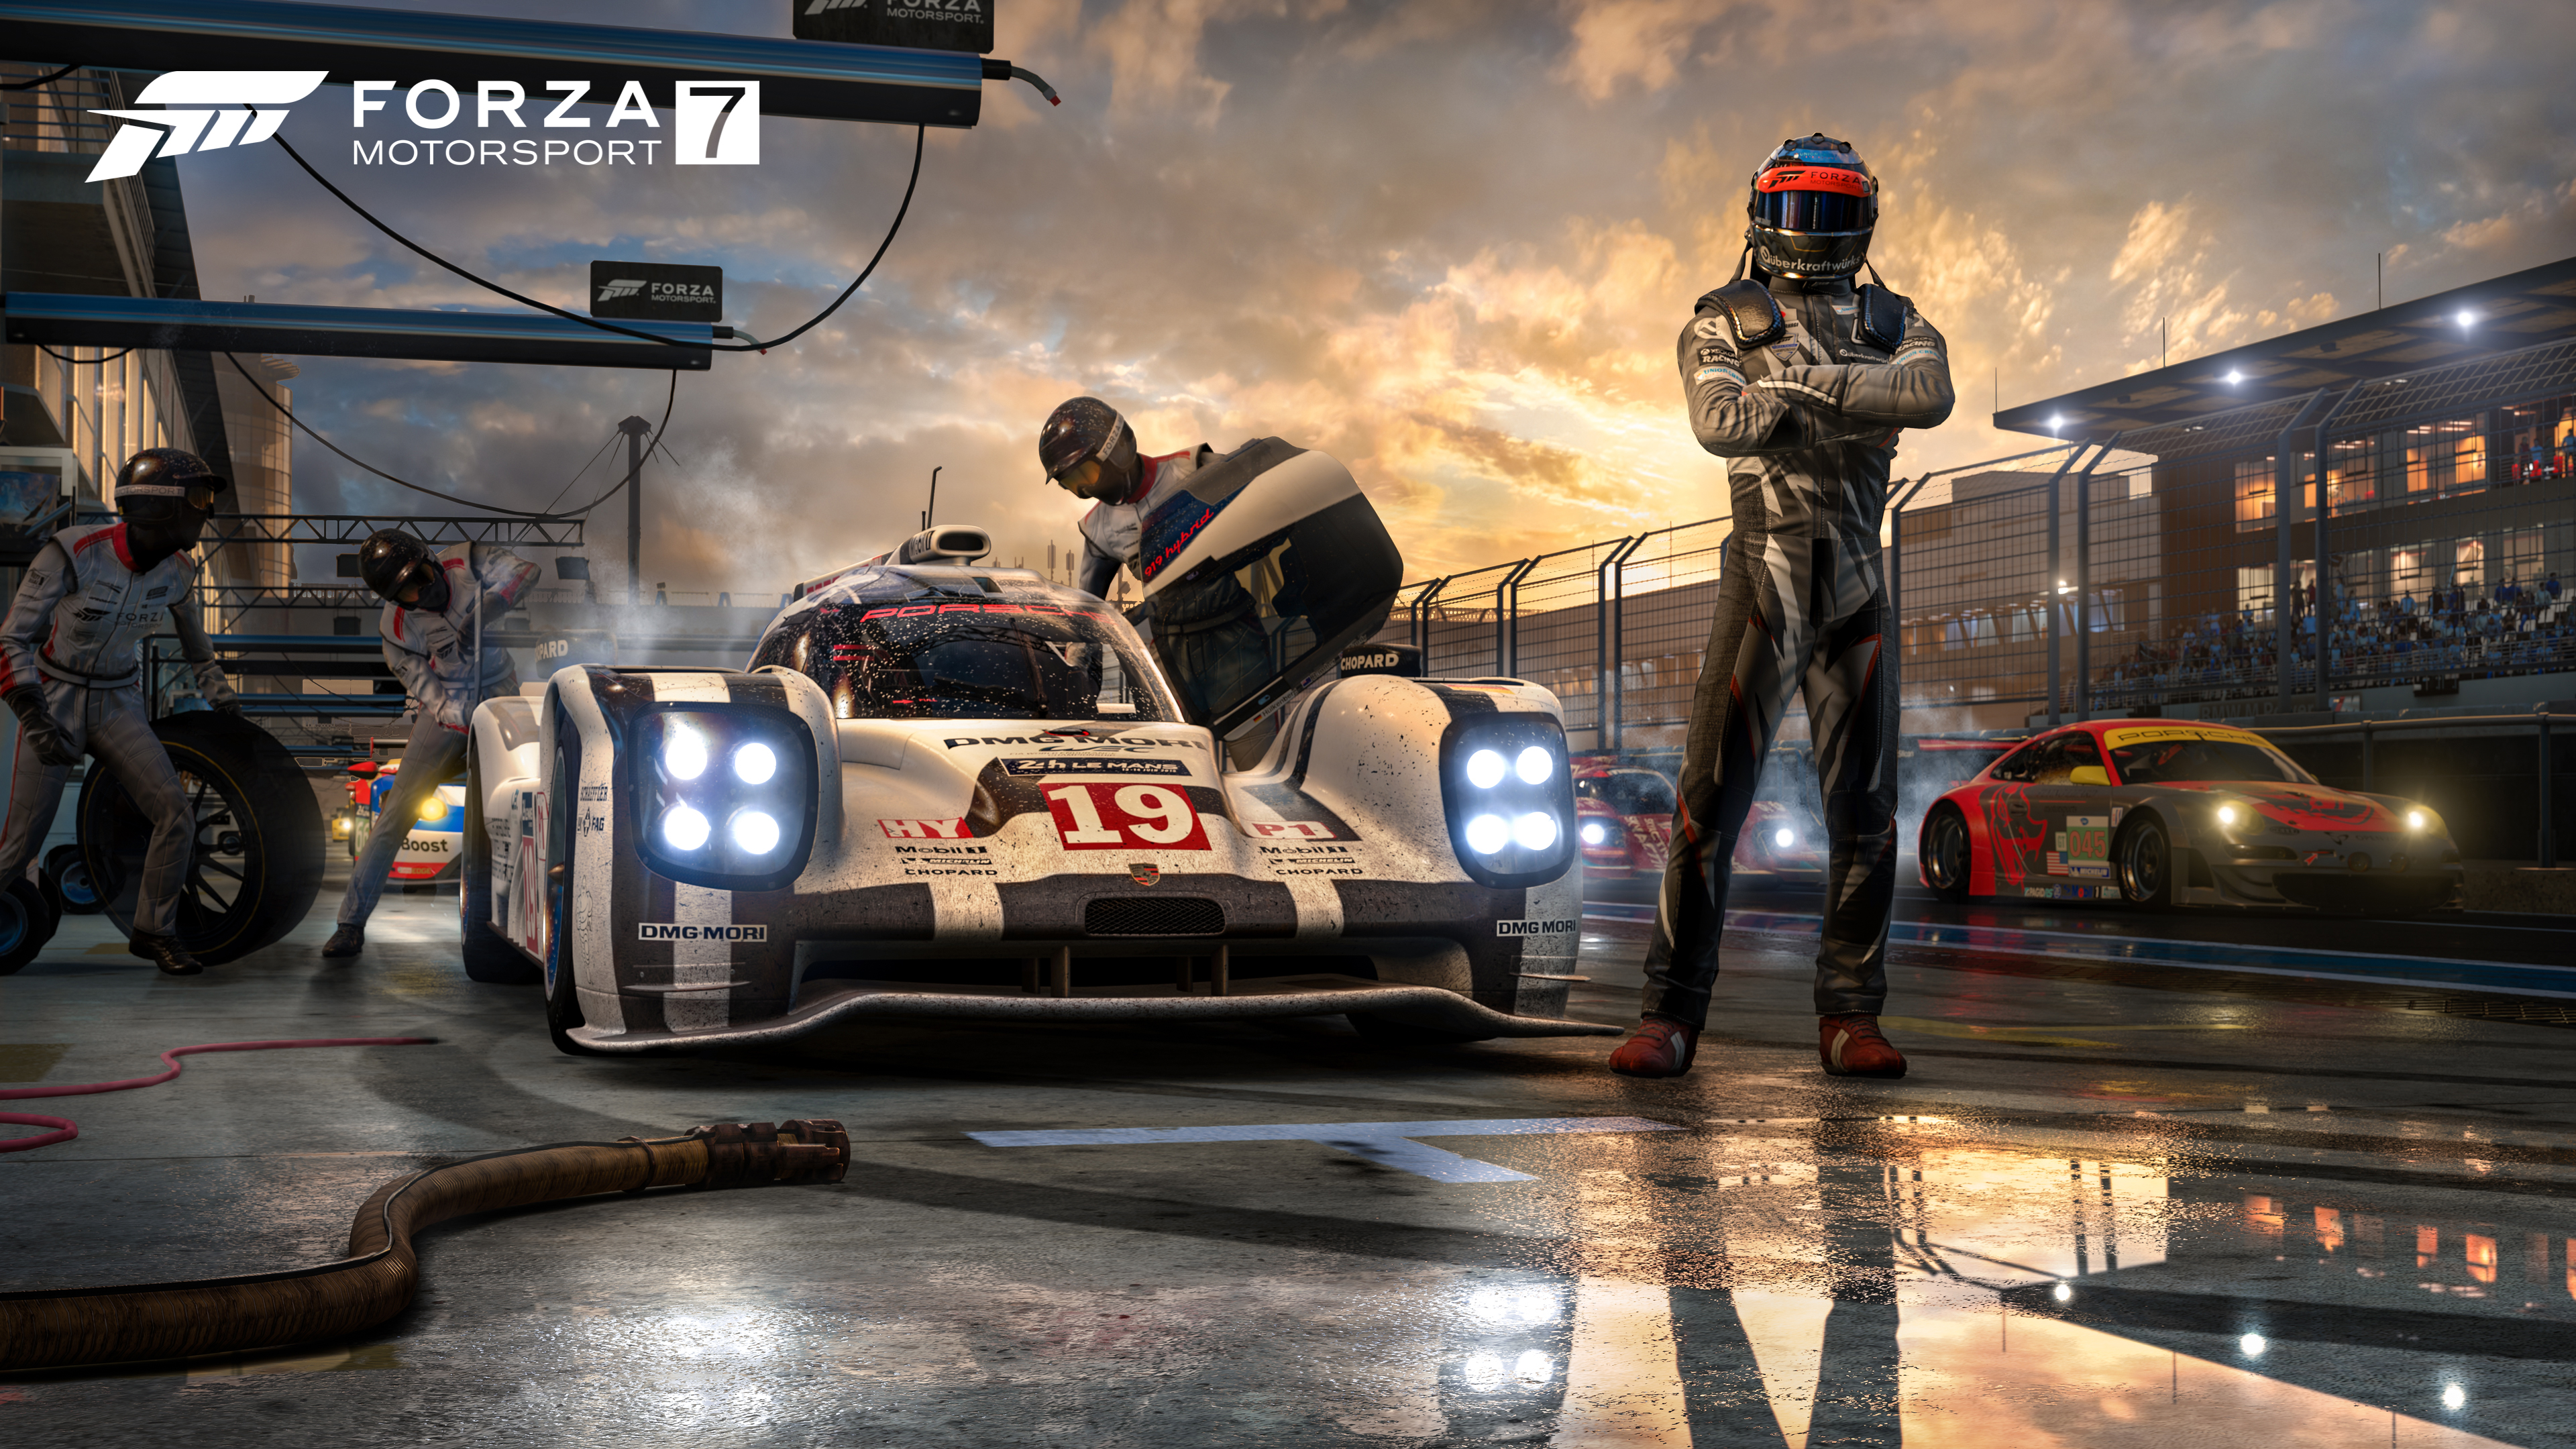 General 3840x2160 sports car Forza Motorsport 7 car racing video games Turn 10 Studios video game art race cars Driver